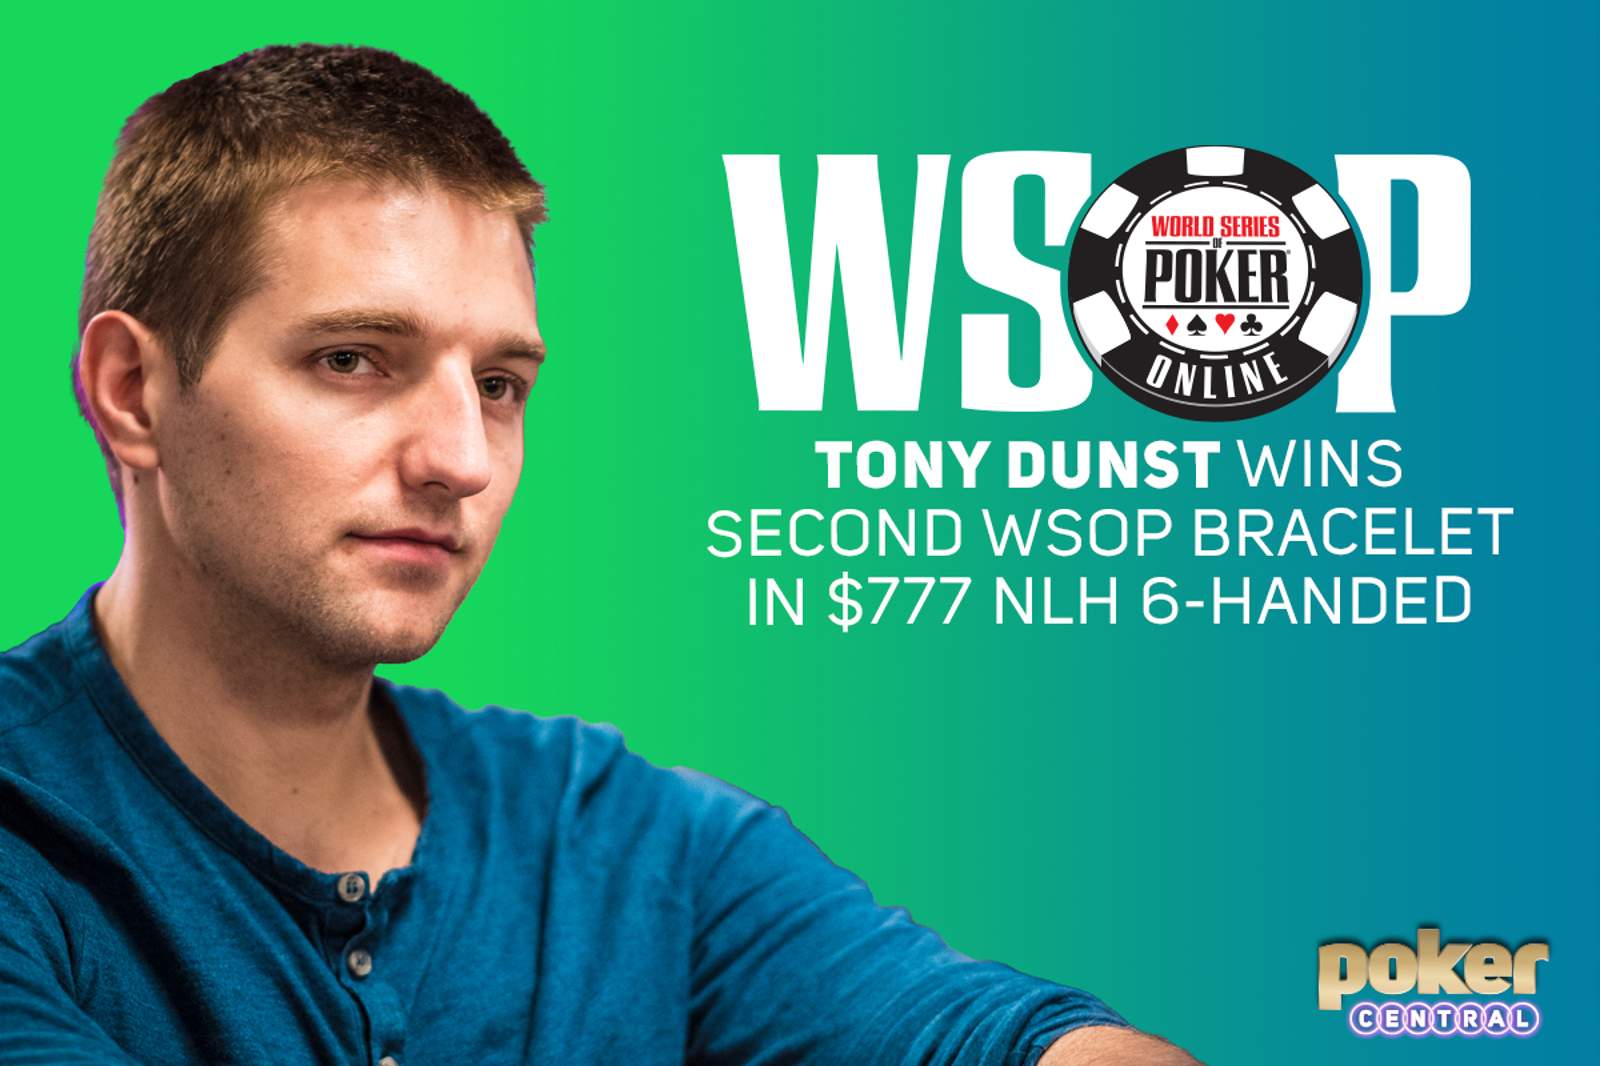 Tony Dunst Wins WSOP Online $777 NLH 6-Handed for $168,342 and Second WSOP Bracelet